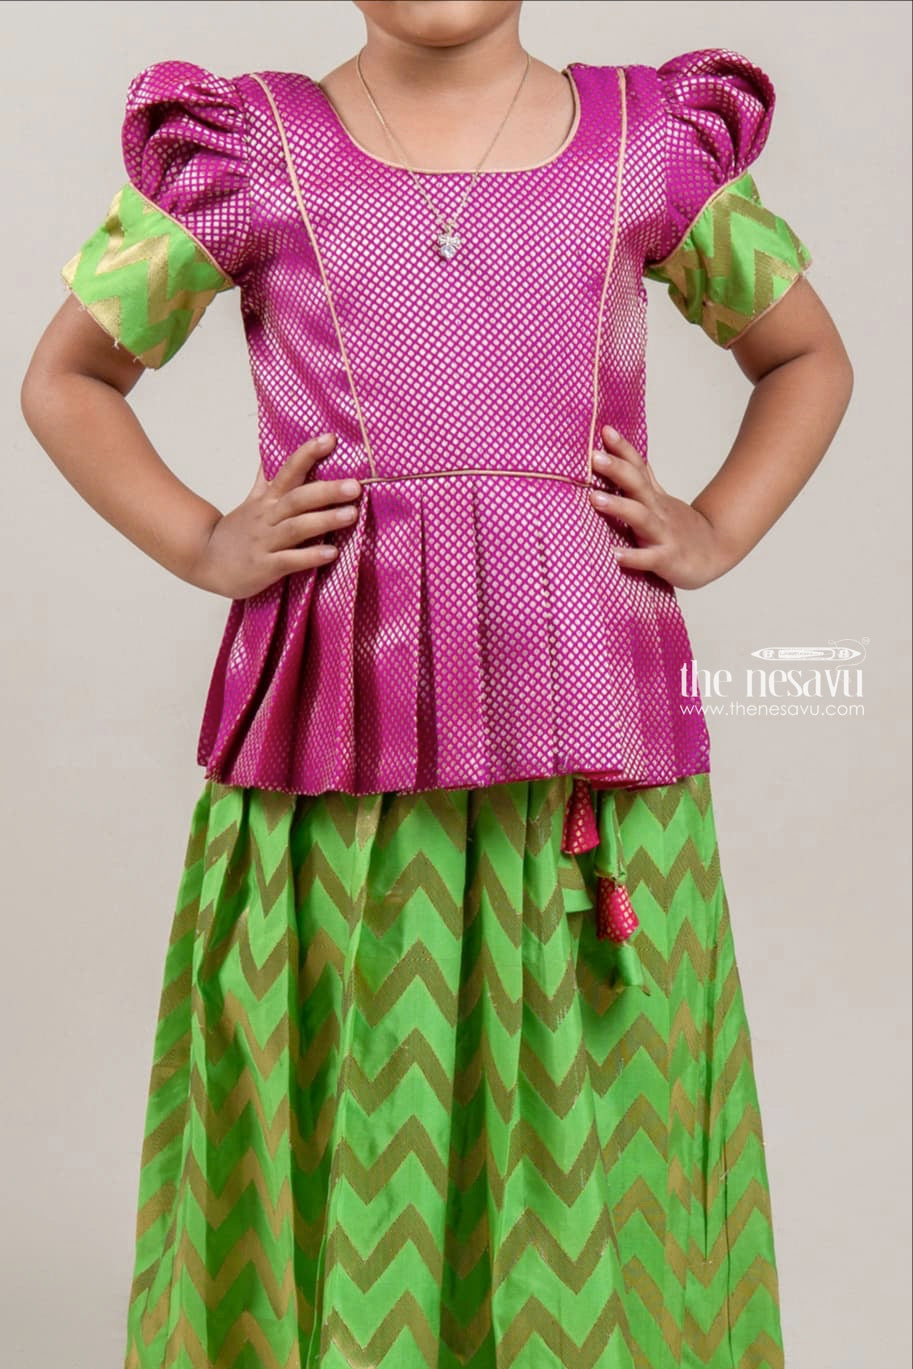 The Nesavu Pattu Pavadai Pink Brocade Designer Silk Blouse with Green Silk Skirt for Girls Nesavu Pink Brocade Silk Blouse with Green Silk Skirt | Traditional Pattu Pavadai |The Nesavu